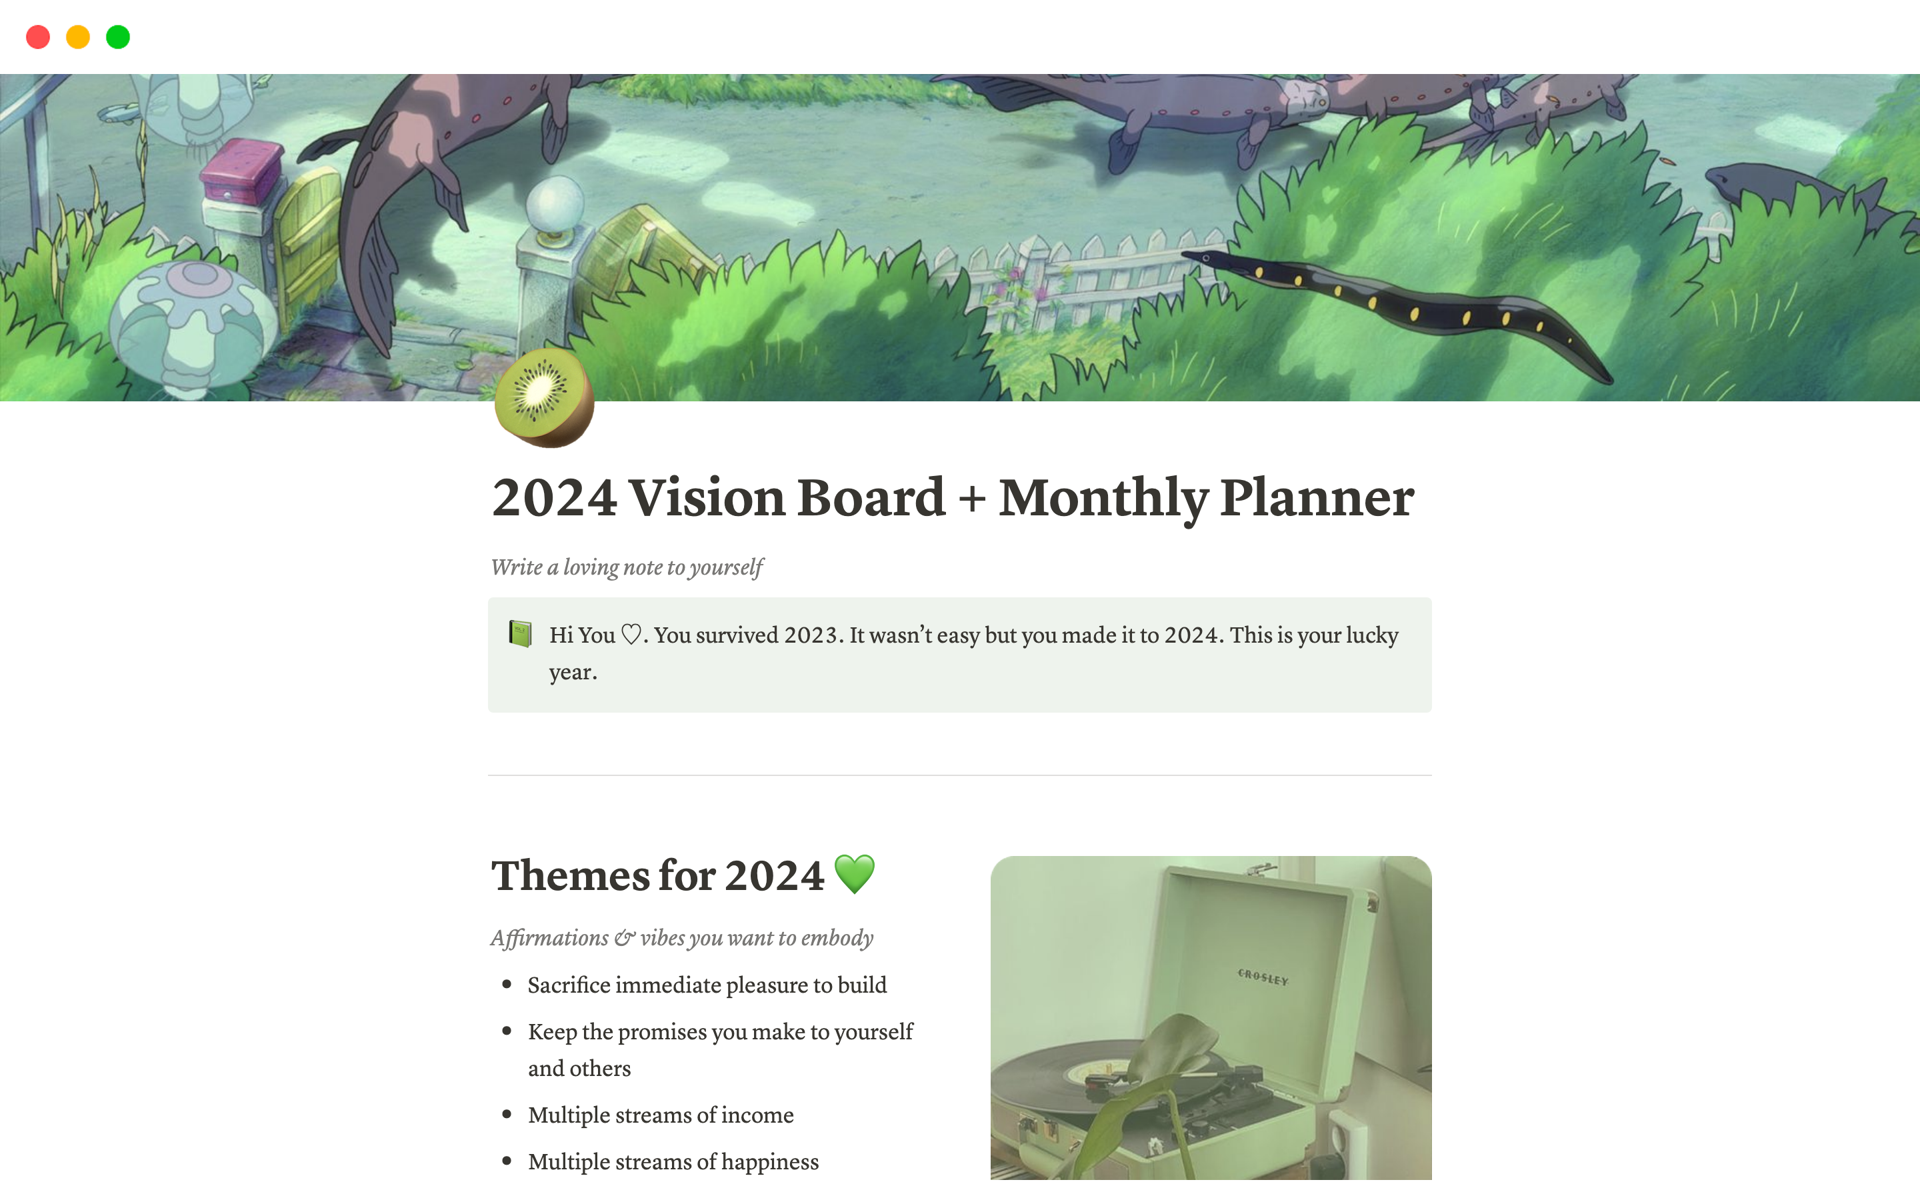 2024 Vision Board + Monthly Planner님의 템플릿 미리보기